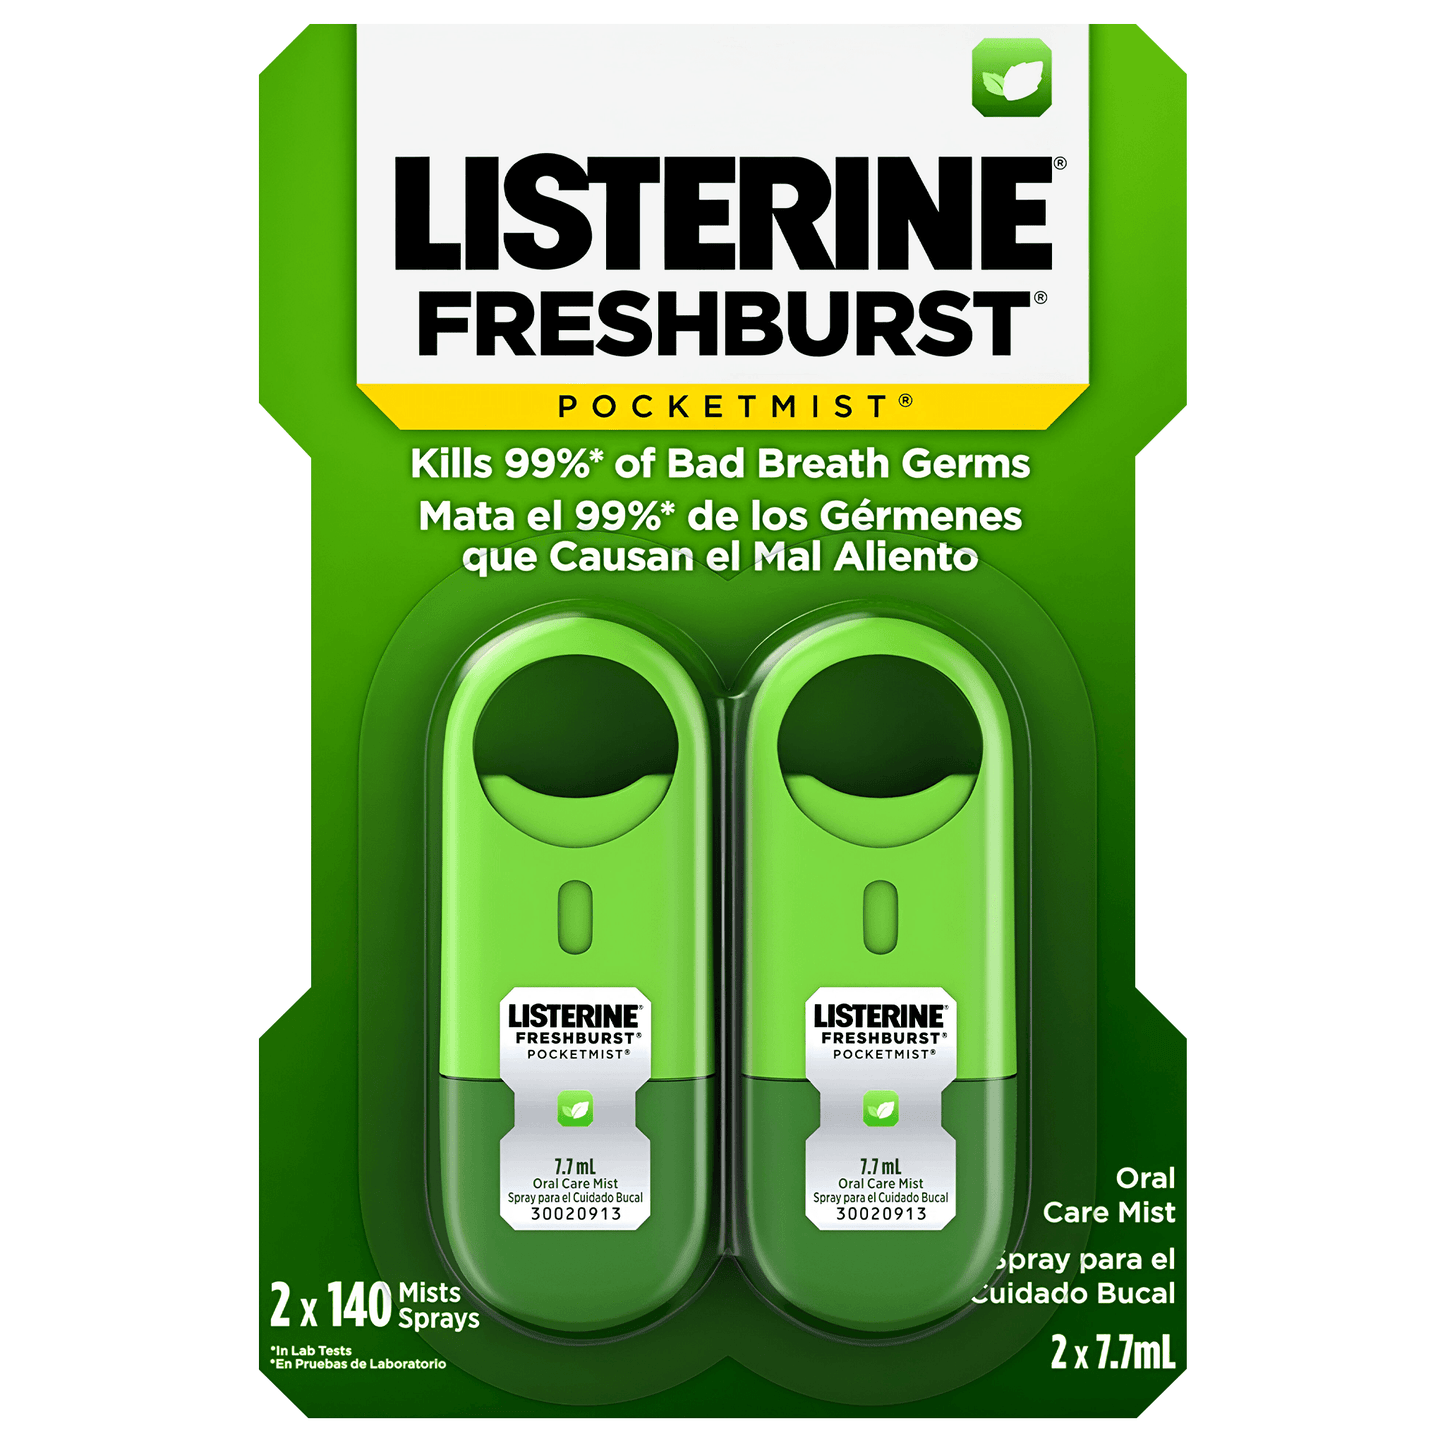 Listerine ®️ Freshburst PocketMist • Ademstrips Tegen Slechte-Adem Kiemen & Onaangename Adem • 2x7.7ml